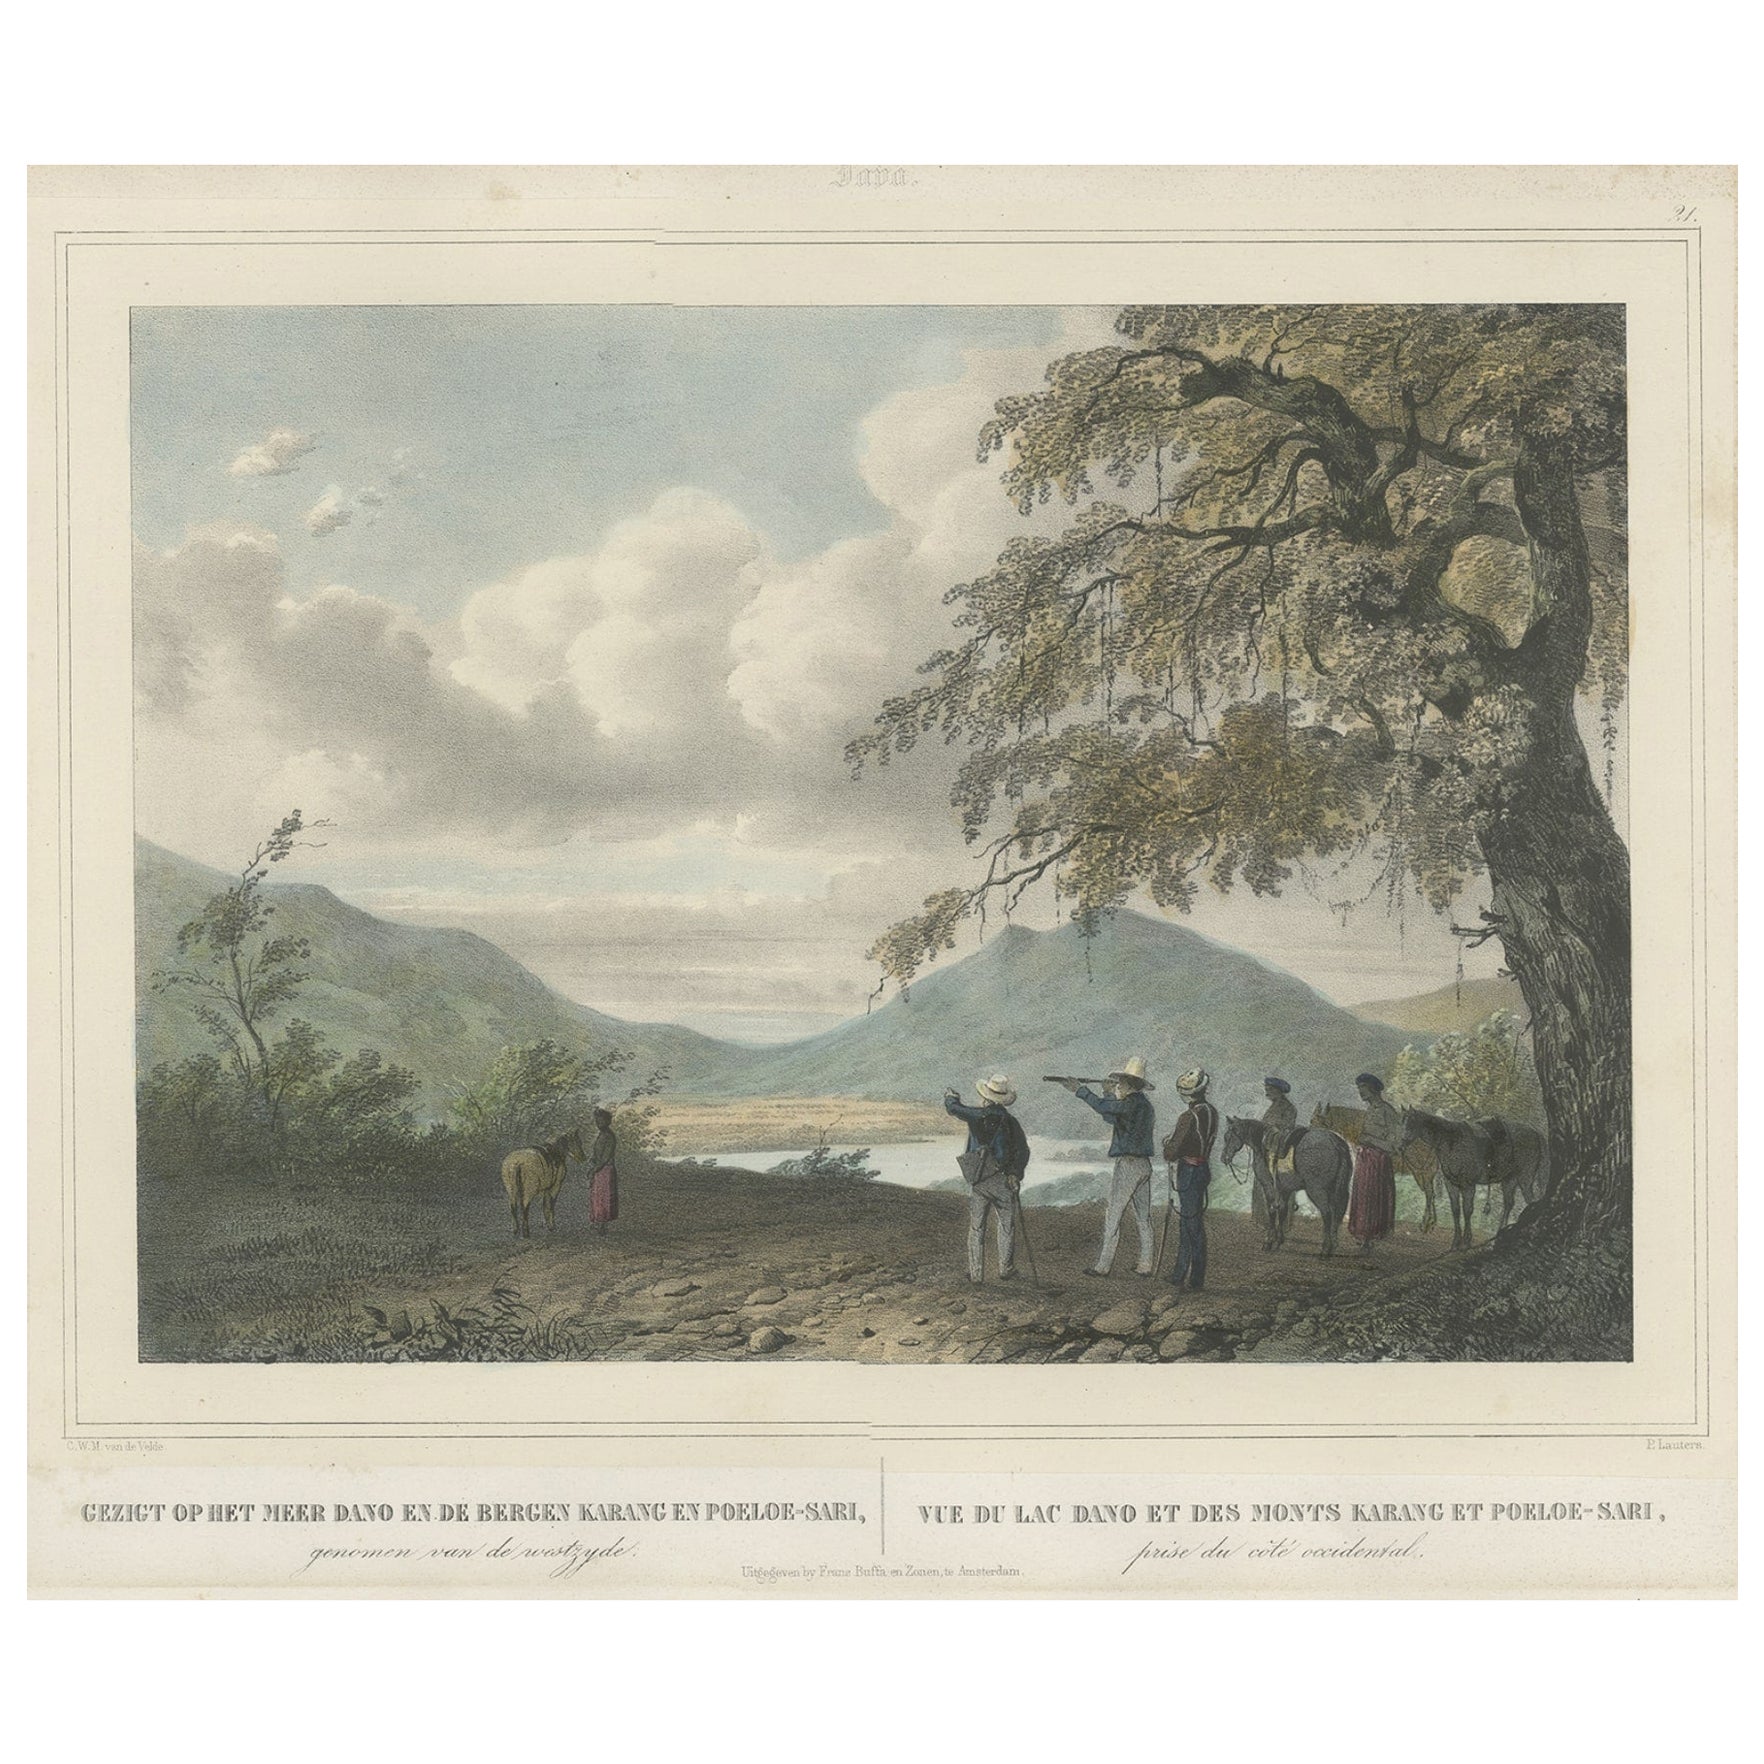 Antique Print of a Poeloe Sari and Karang Sari Mountain, West Java, Indonesia For Sale